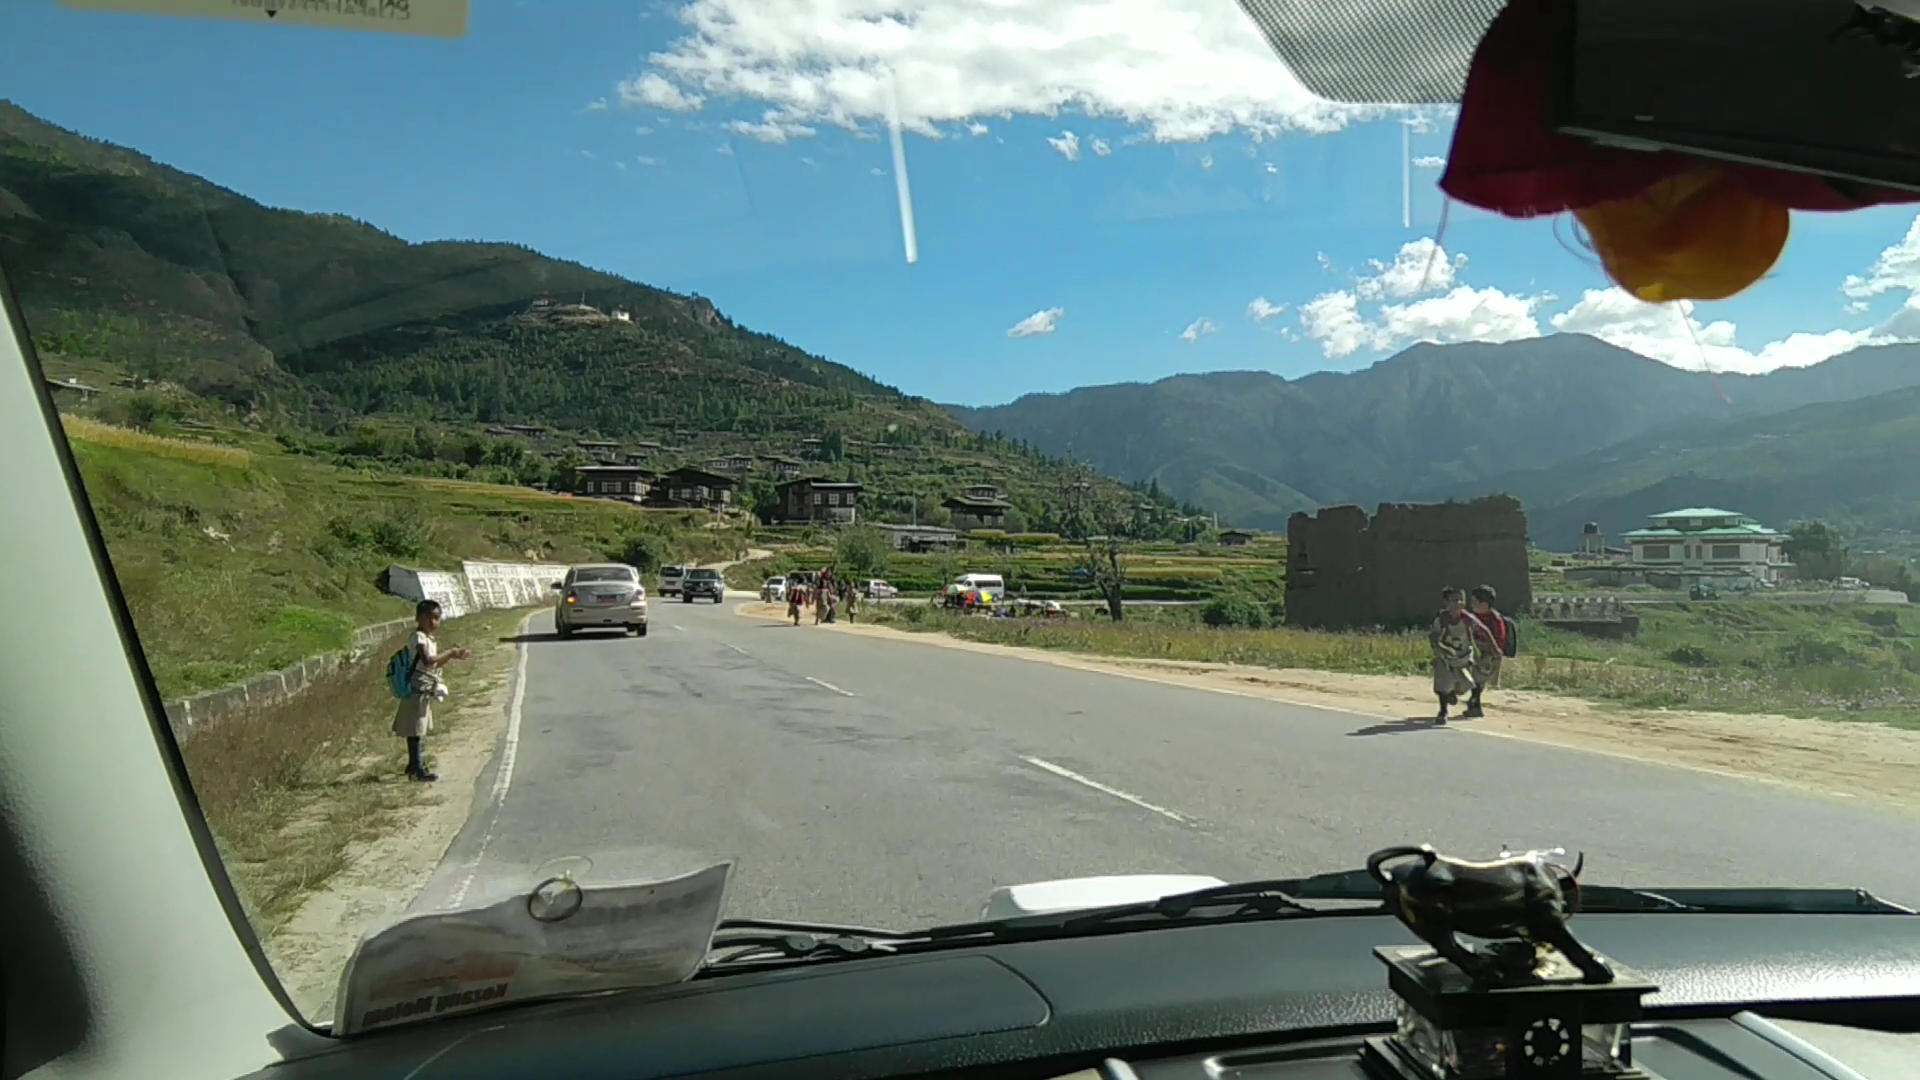 On the way to Thimpu from Paro